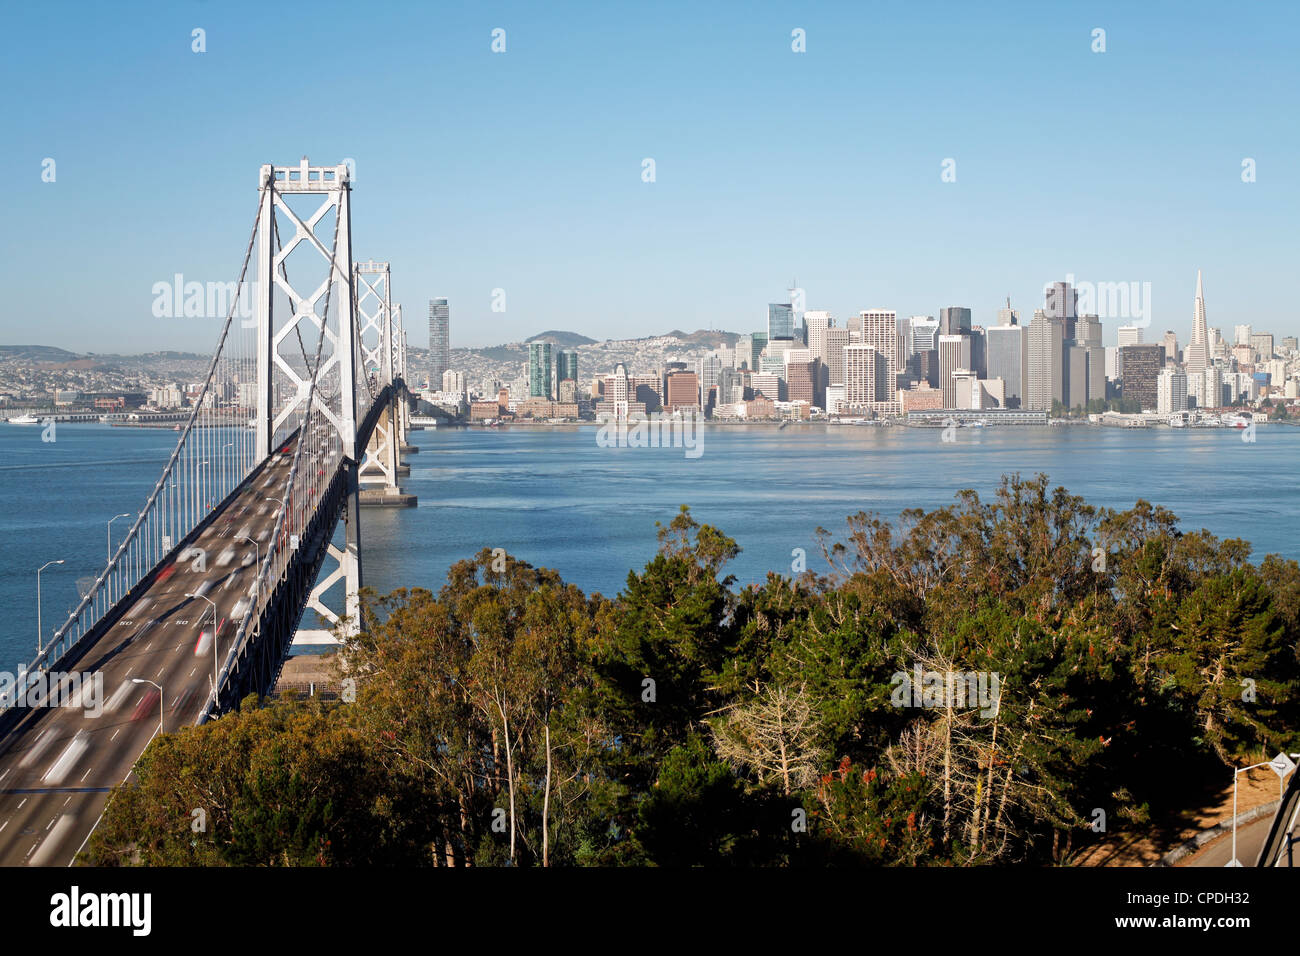 Oakland Bay Bridge and city skyline, San Francisco, California, United States of America, North America Stock Photo